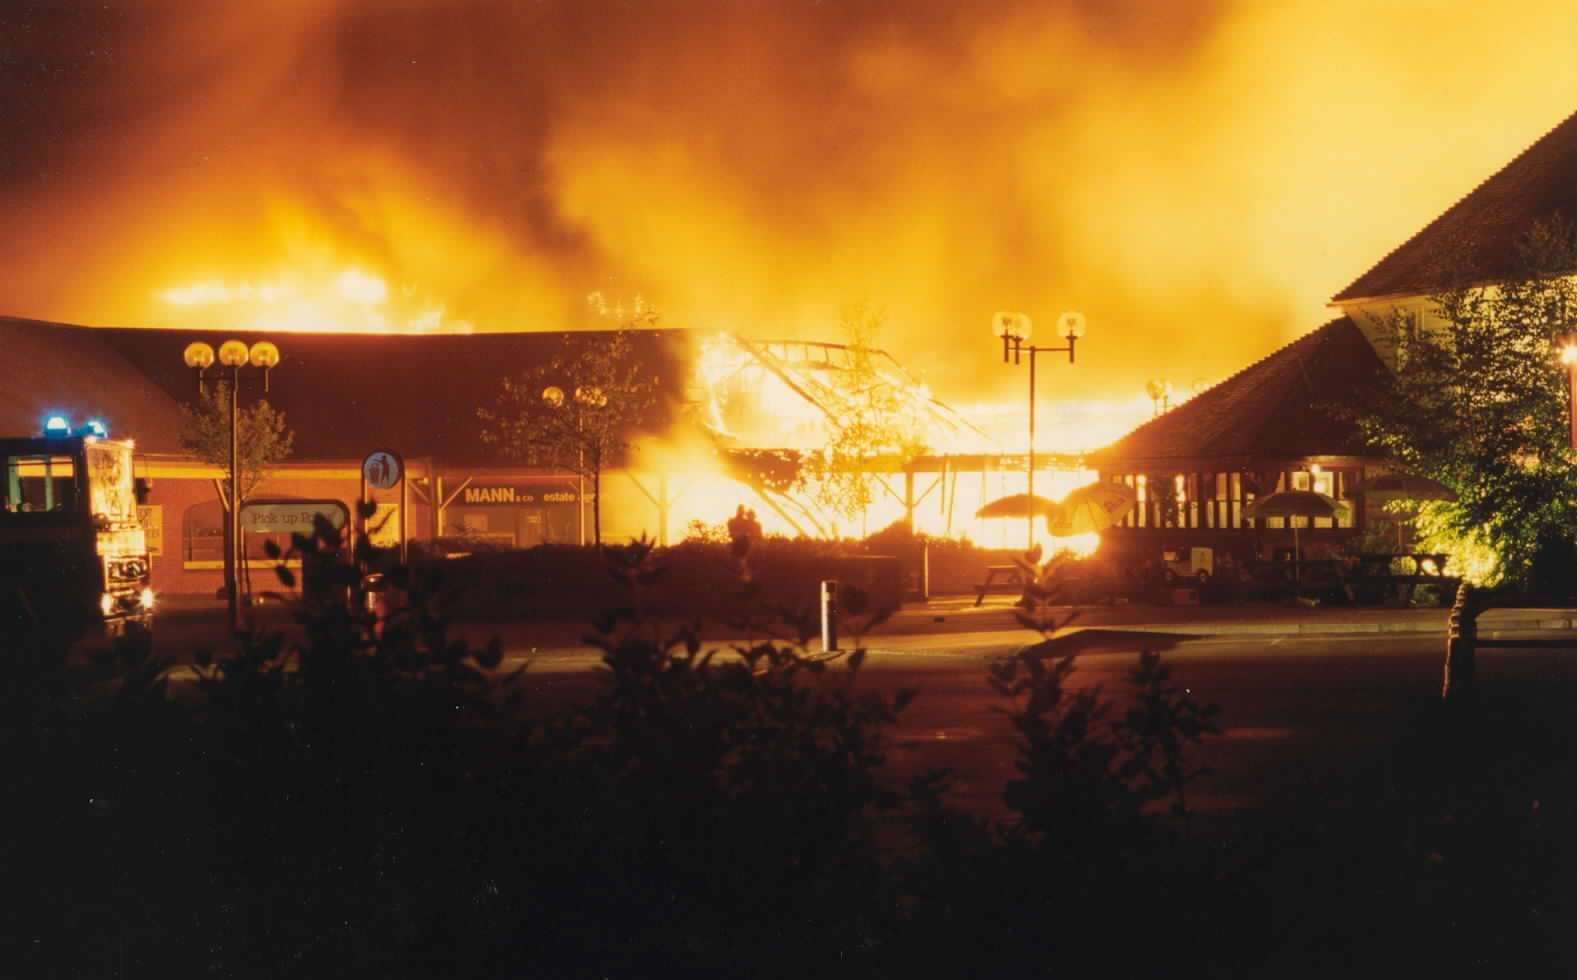 Tesco Grove Green Fire, July 1993. Photo credit: Roy Kingston